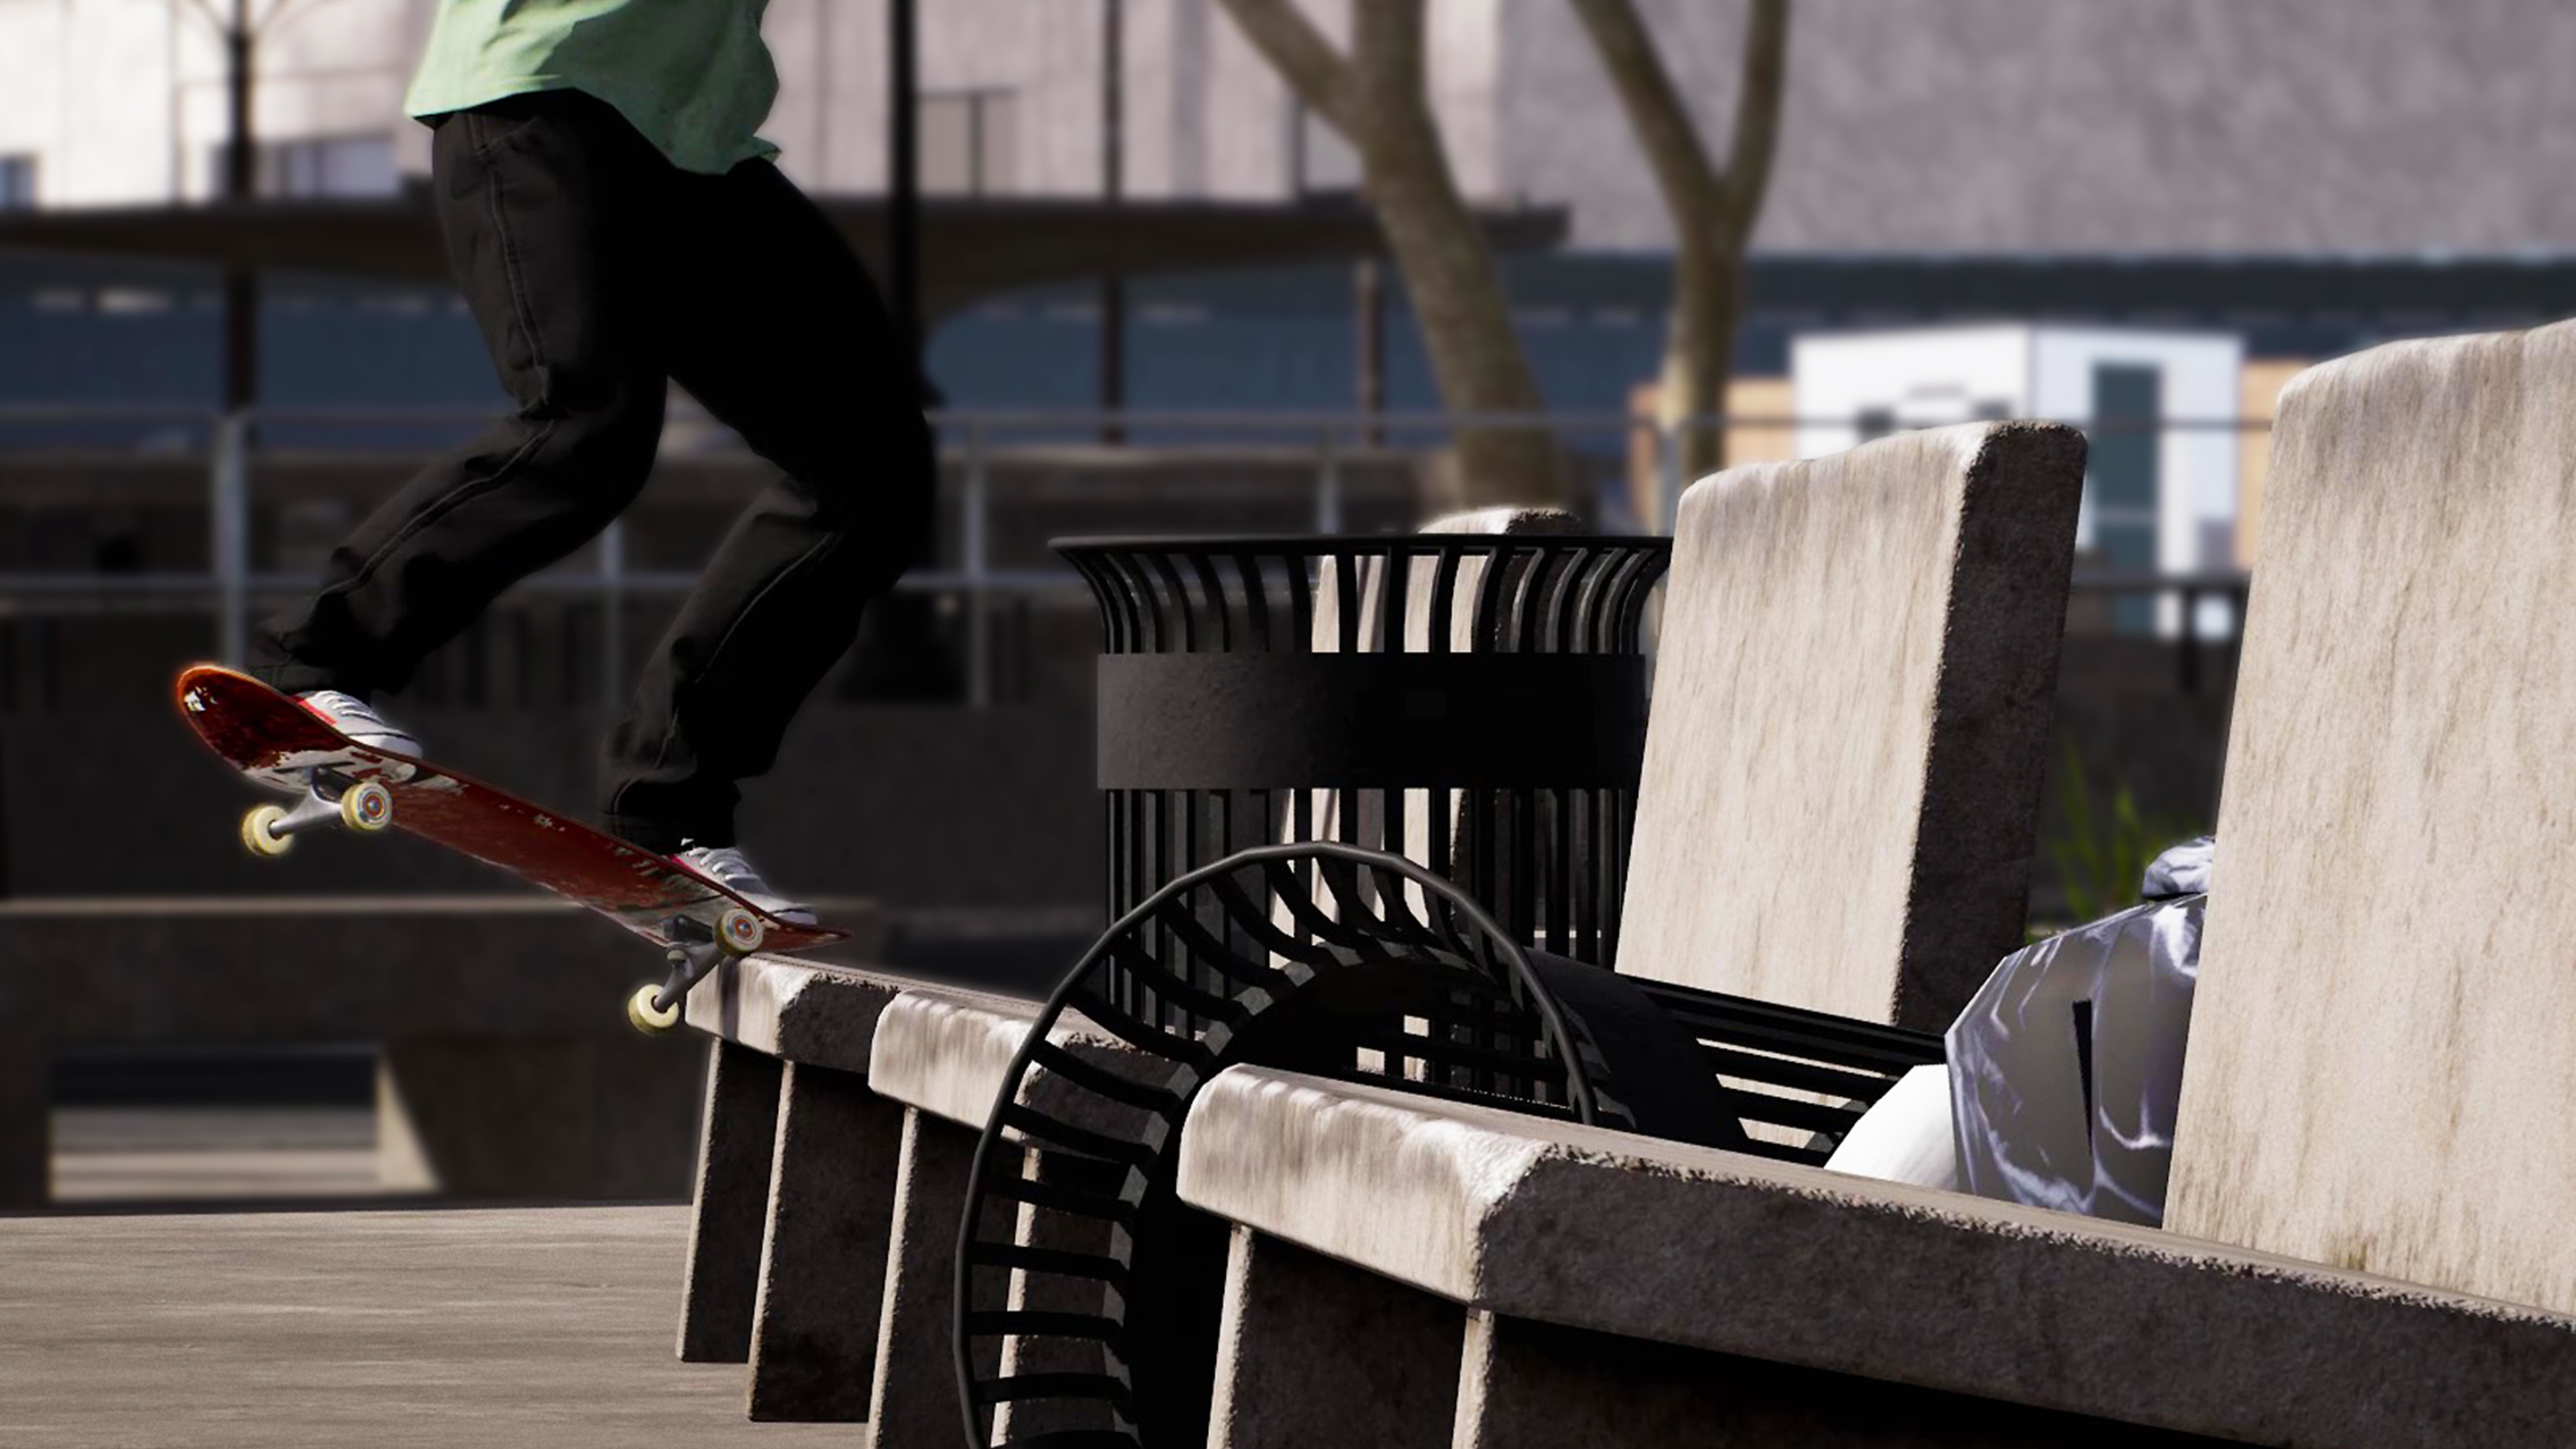 Captura de pantalla de Session: Skate Sim que muestra a un skater grindando en un banco